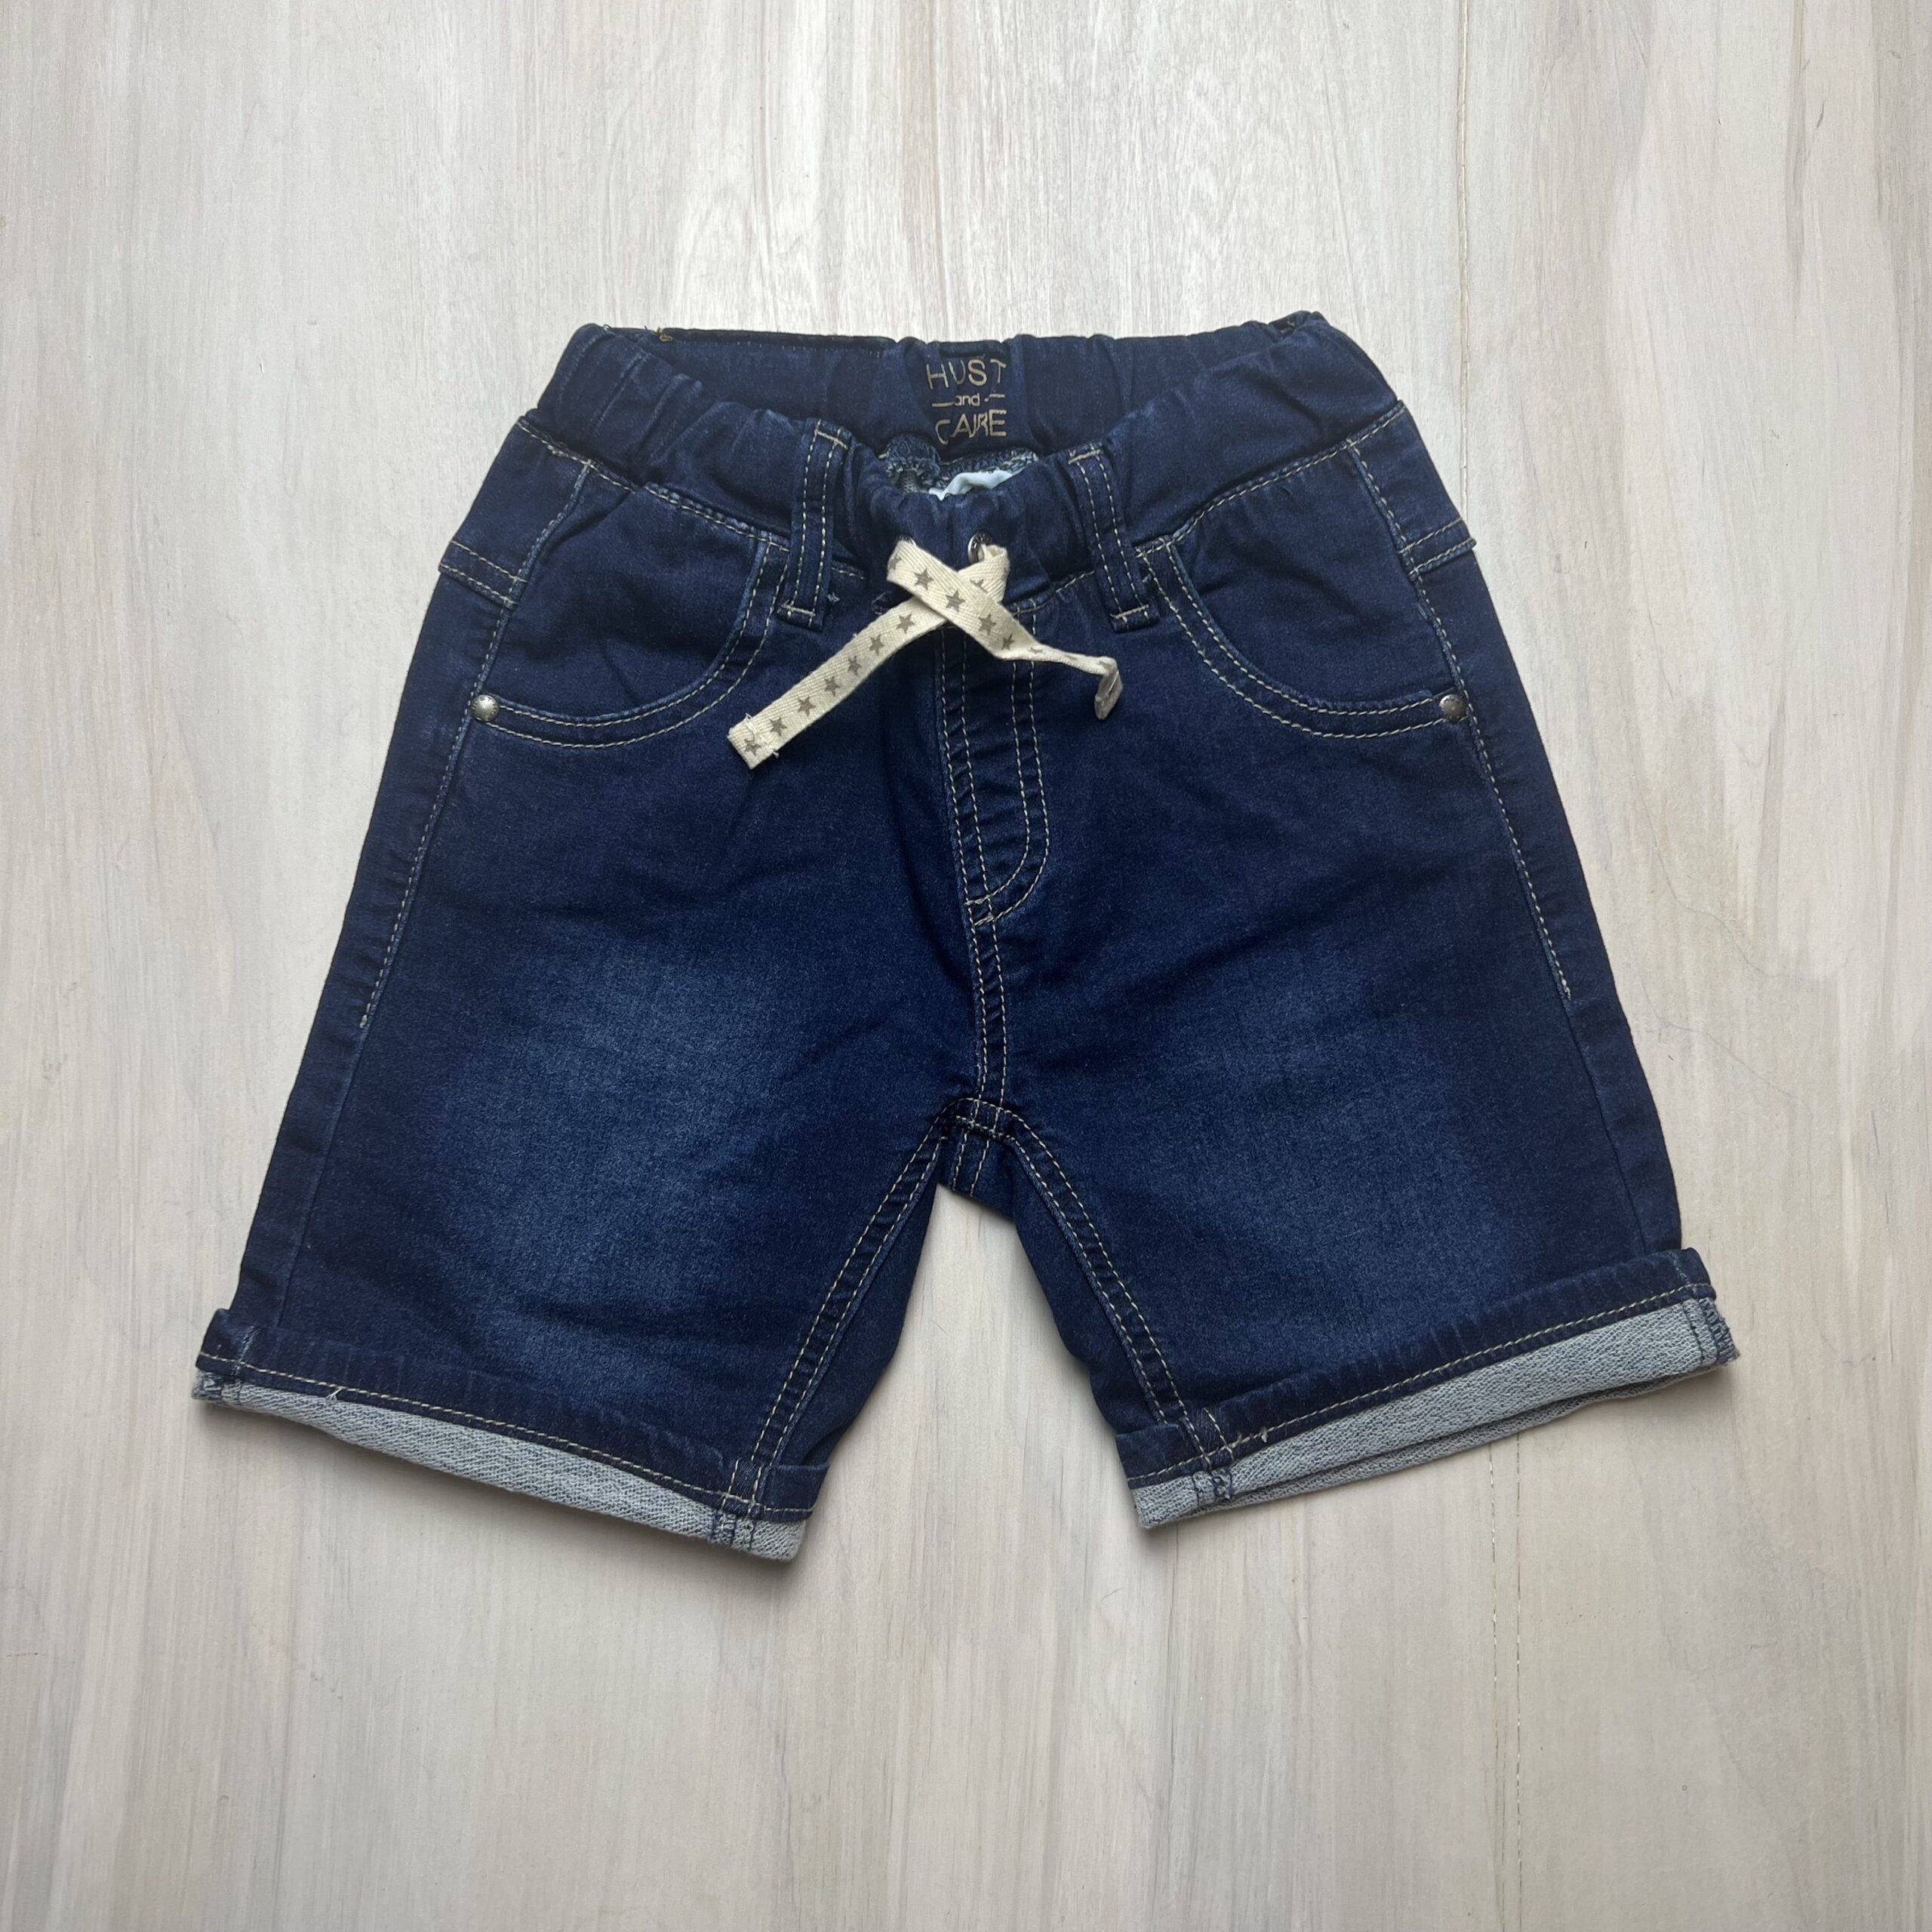 jeans-corti-shorts-bimbo-blu-jes-hust-and-claire